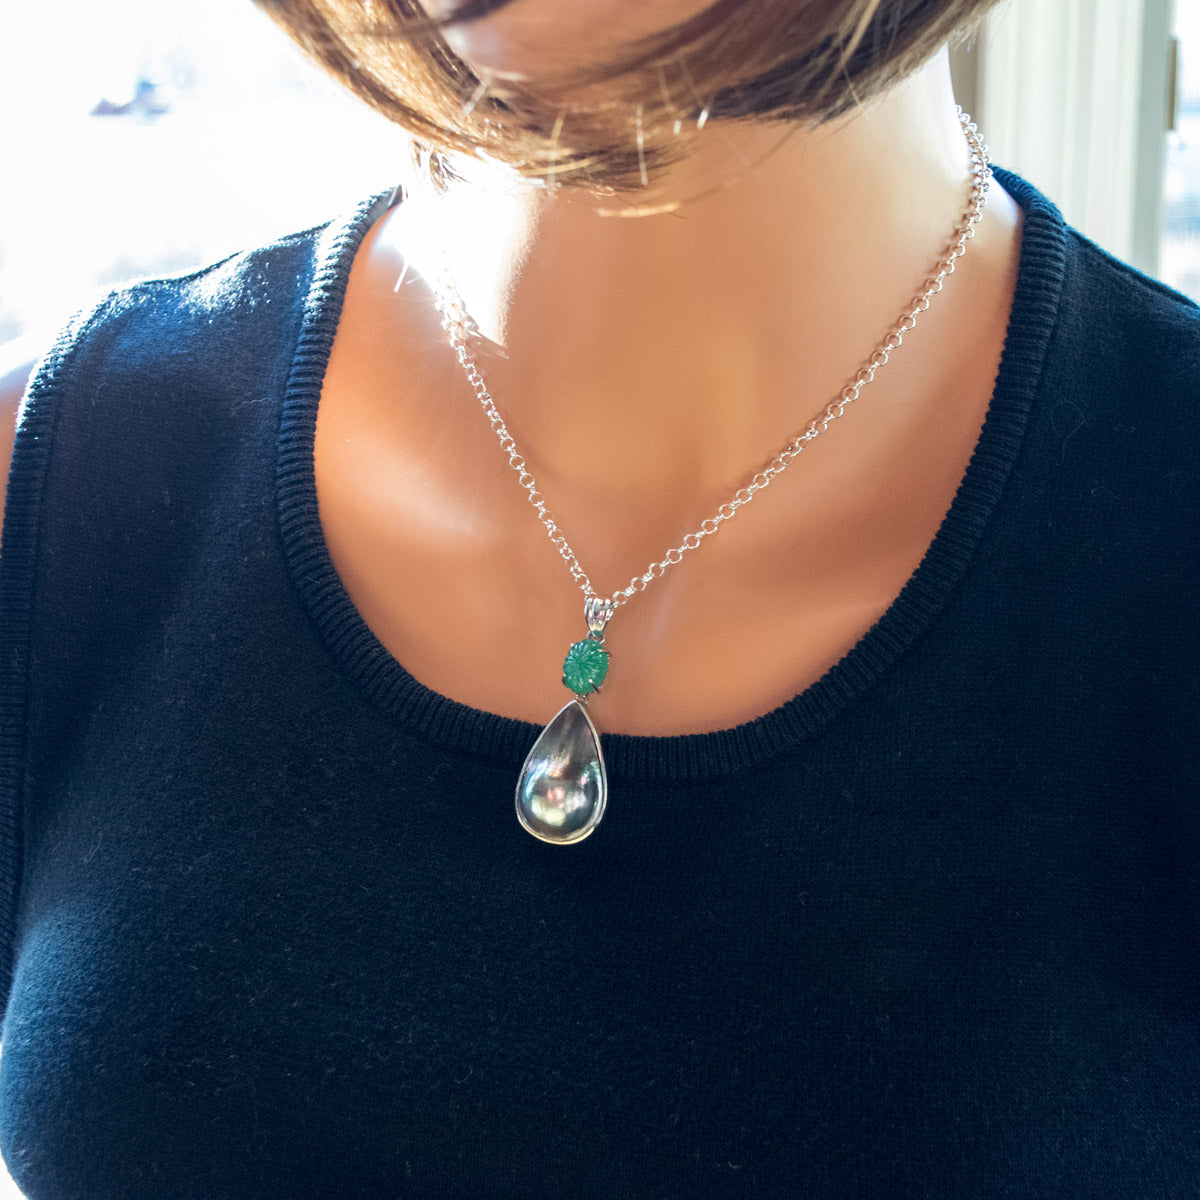 Mabe Pearl & Green Quartz Necklace Pendant